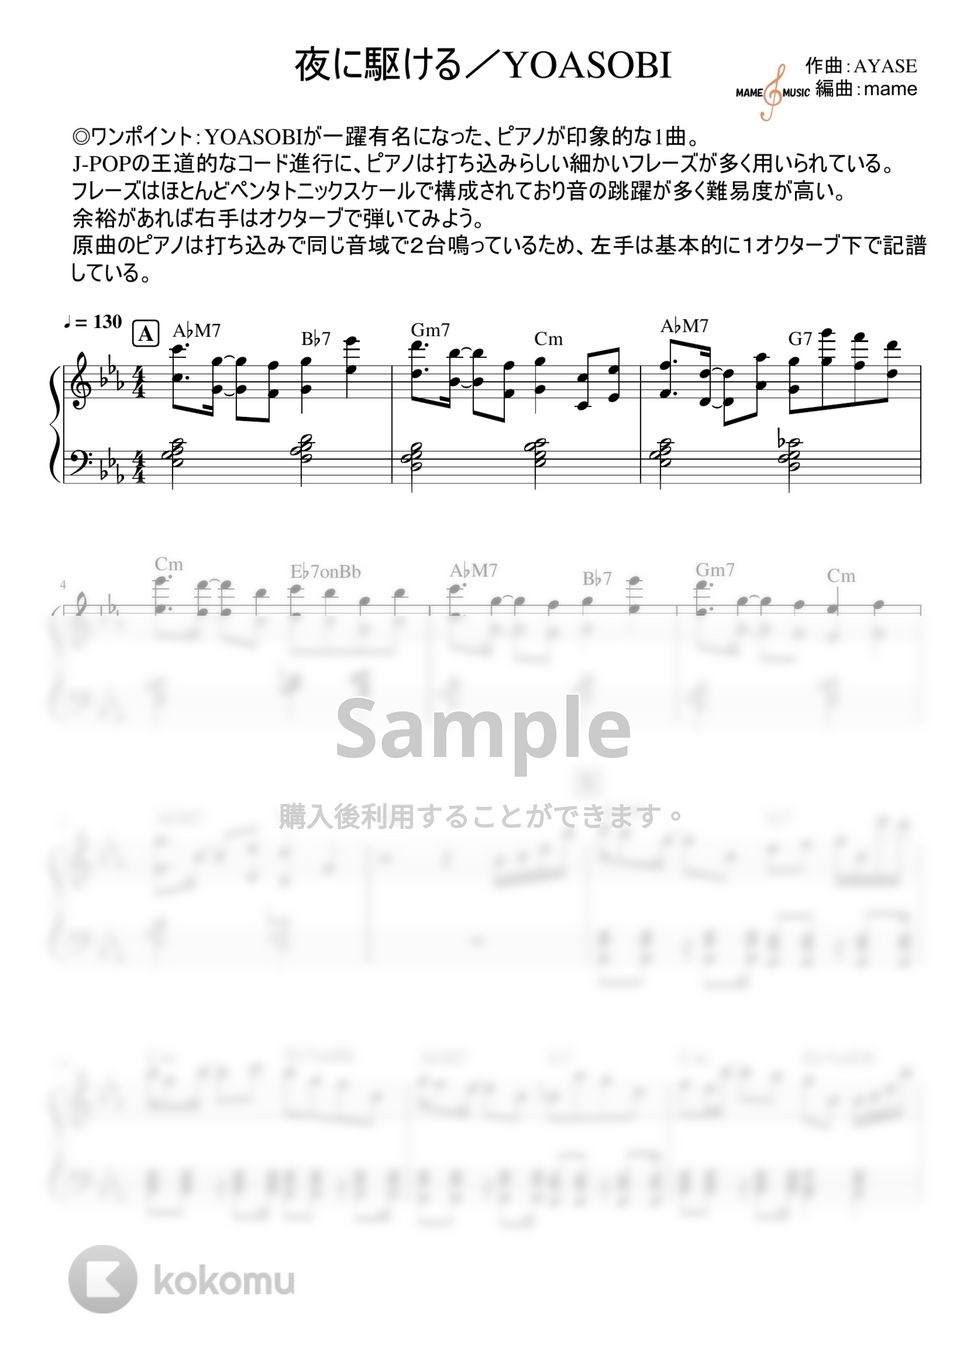 YOASOBI - 夜に駆ける (ピアノパート) by mame